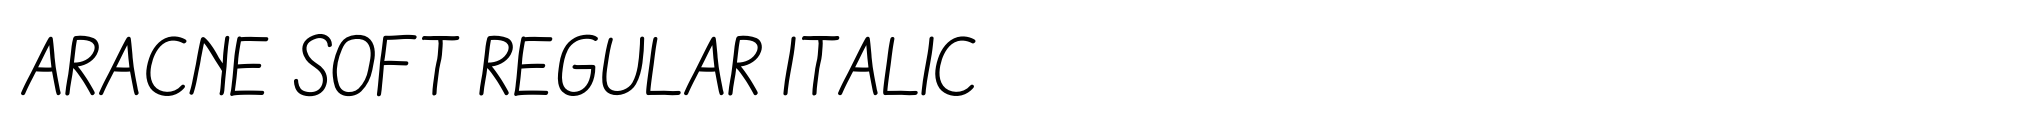 Aracne Soft Regular Italic image